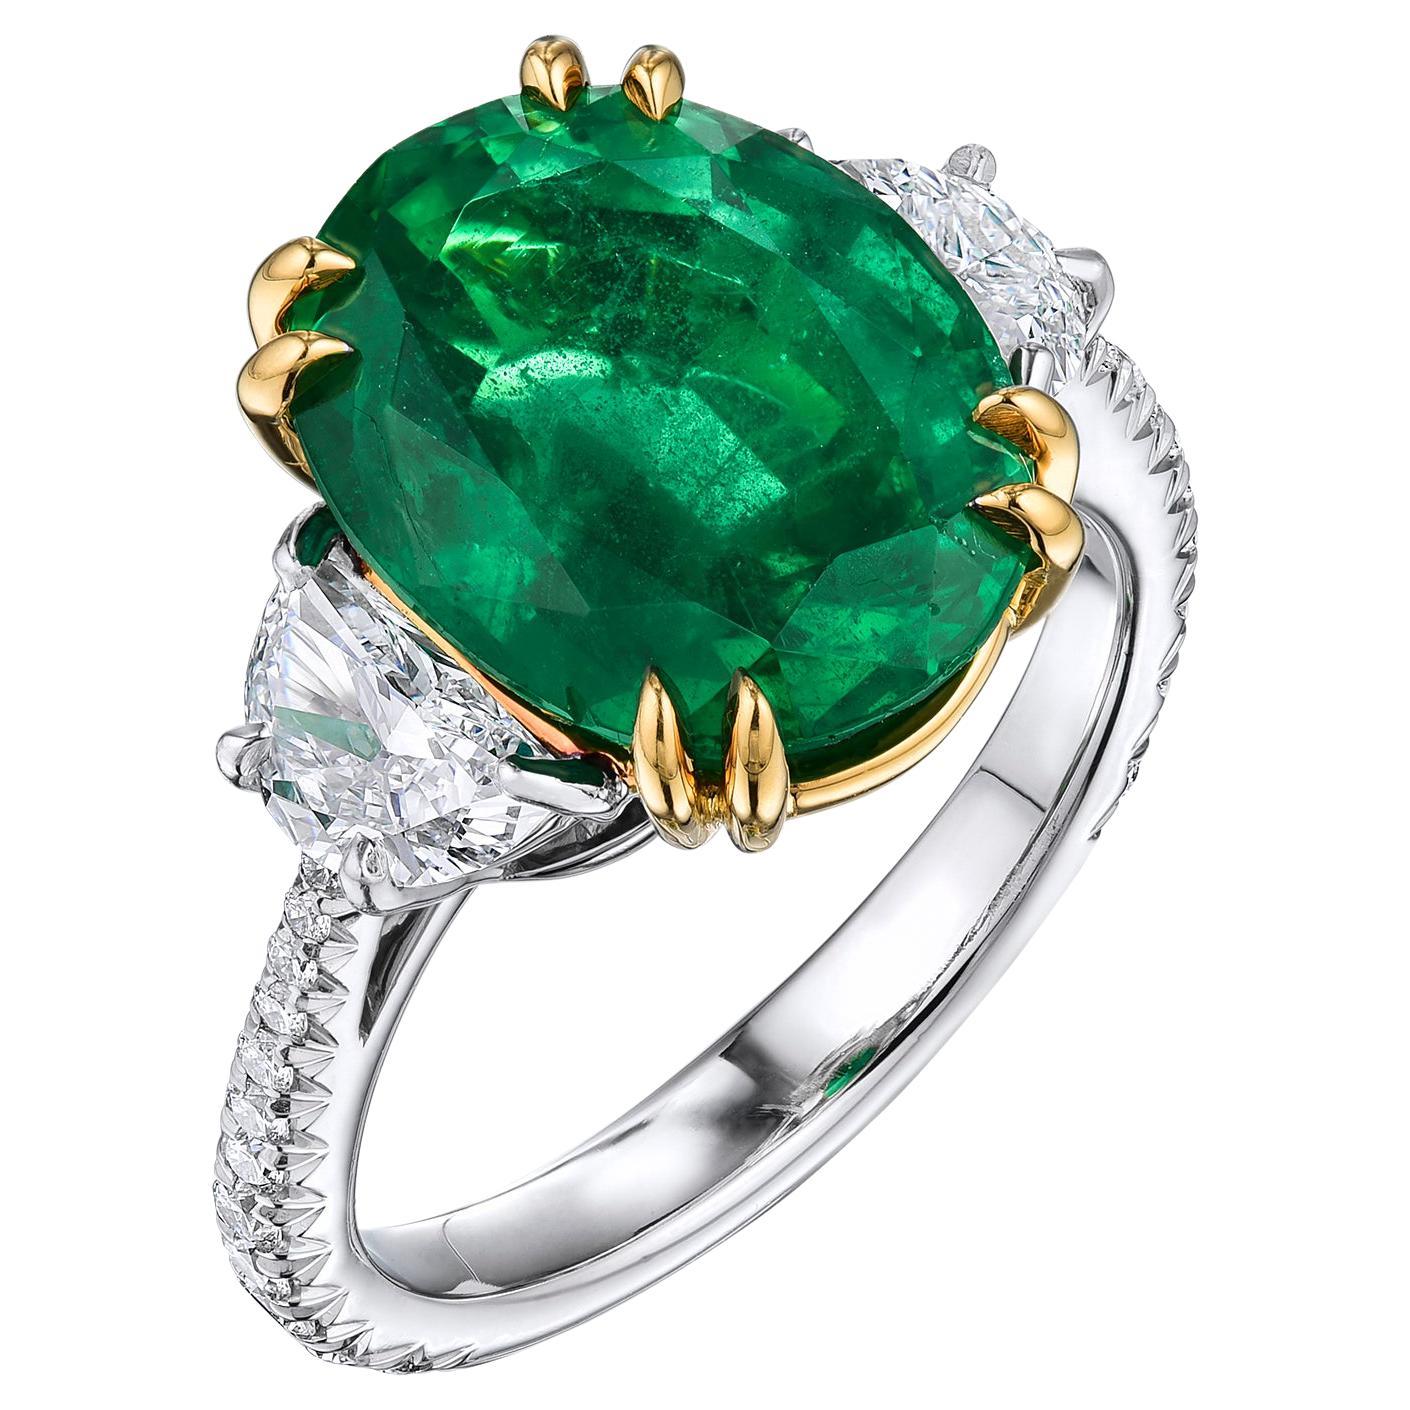 Oval 5.72 Carat Green Emerald Platinum Cocktail/Engagement Ring Set in Platinum